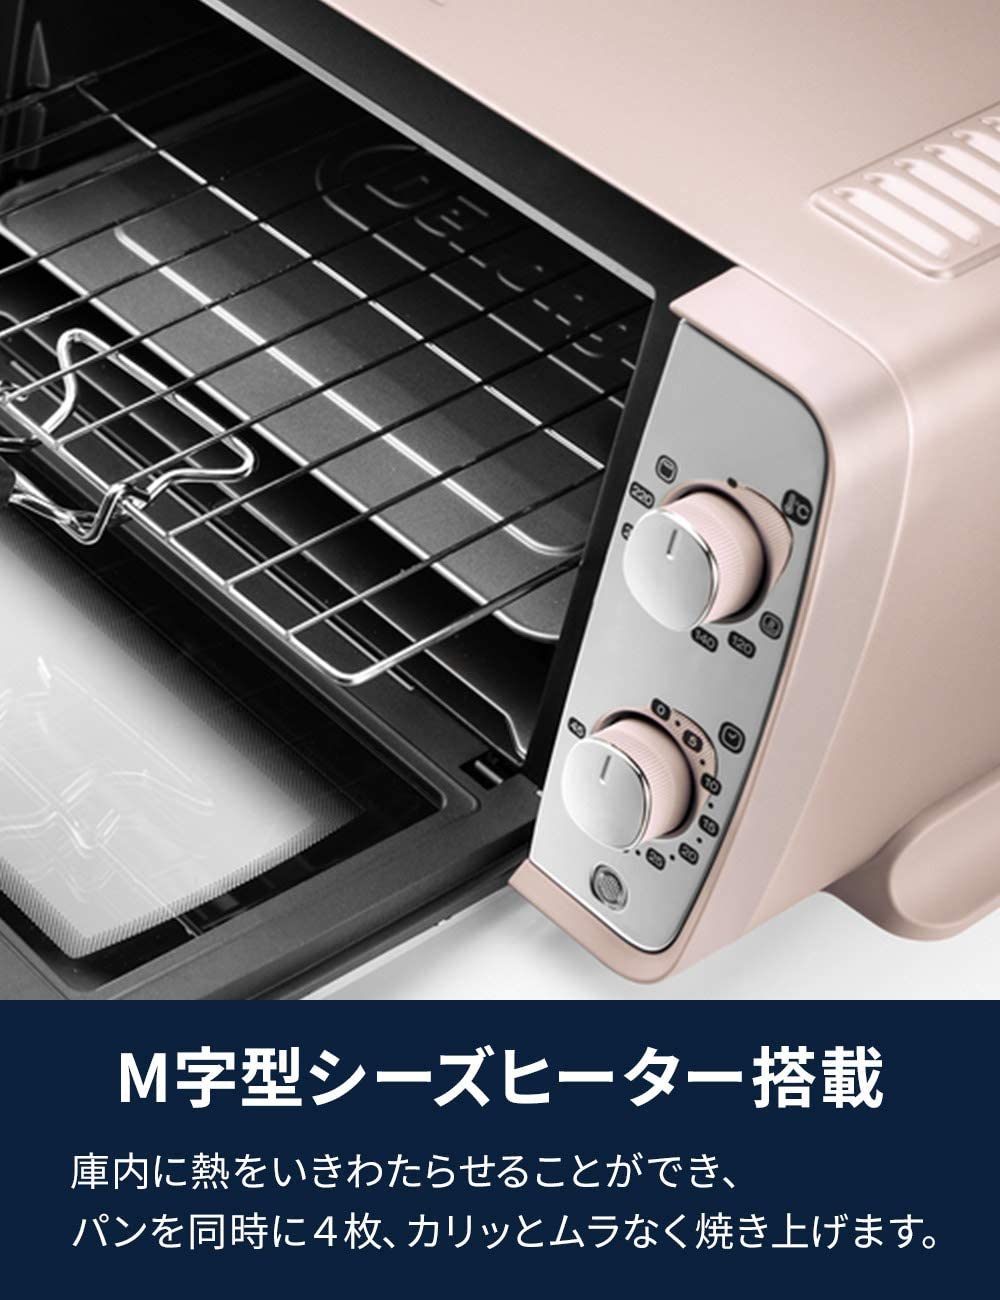 【DeLonghi】オーブン&トースター PK